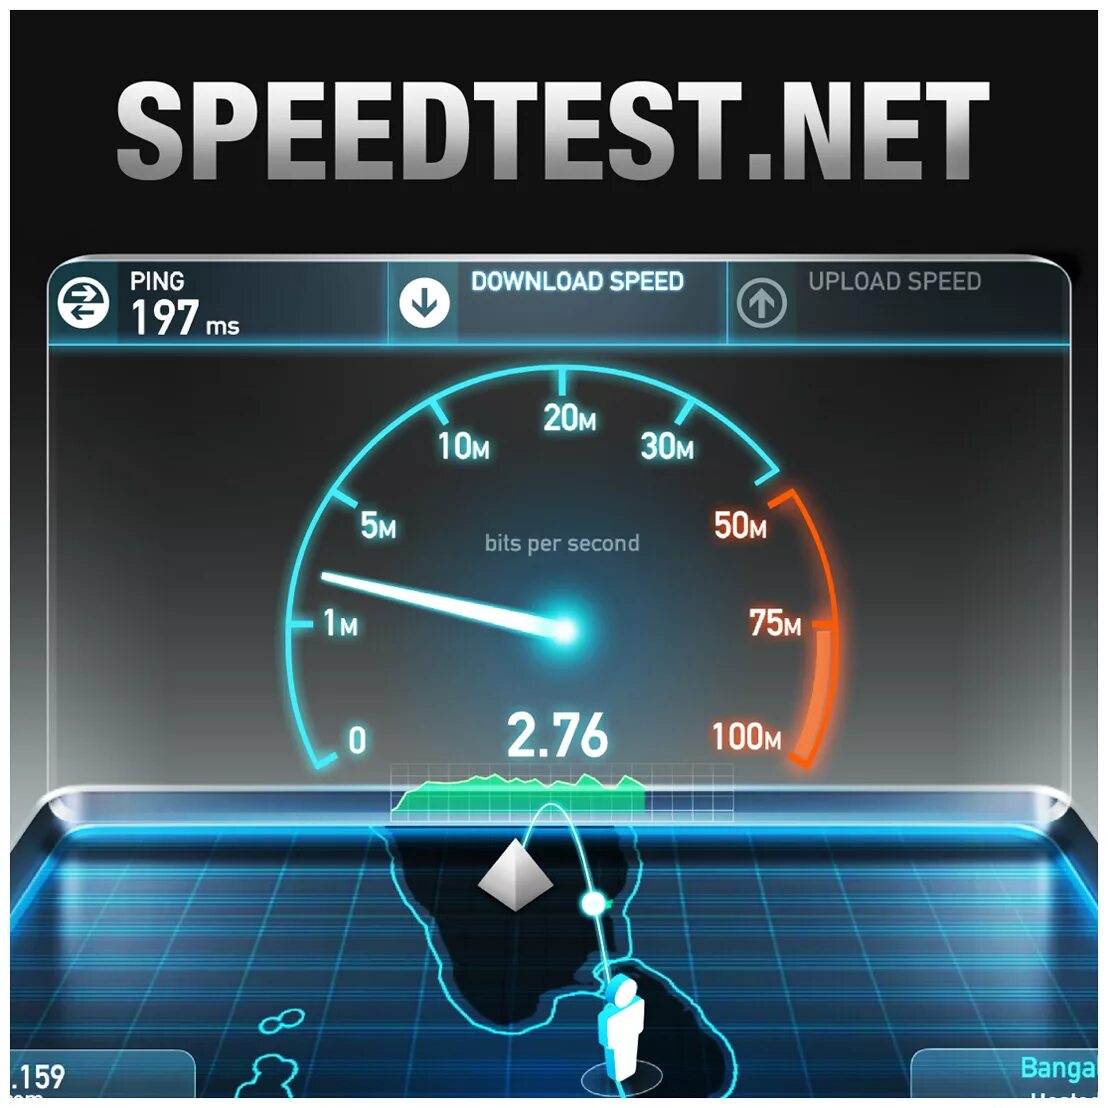 Test net 1. Спидтест. Тест скорости интернета. Speedtest.net. Спидтест скорости интернета.